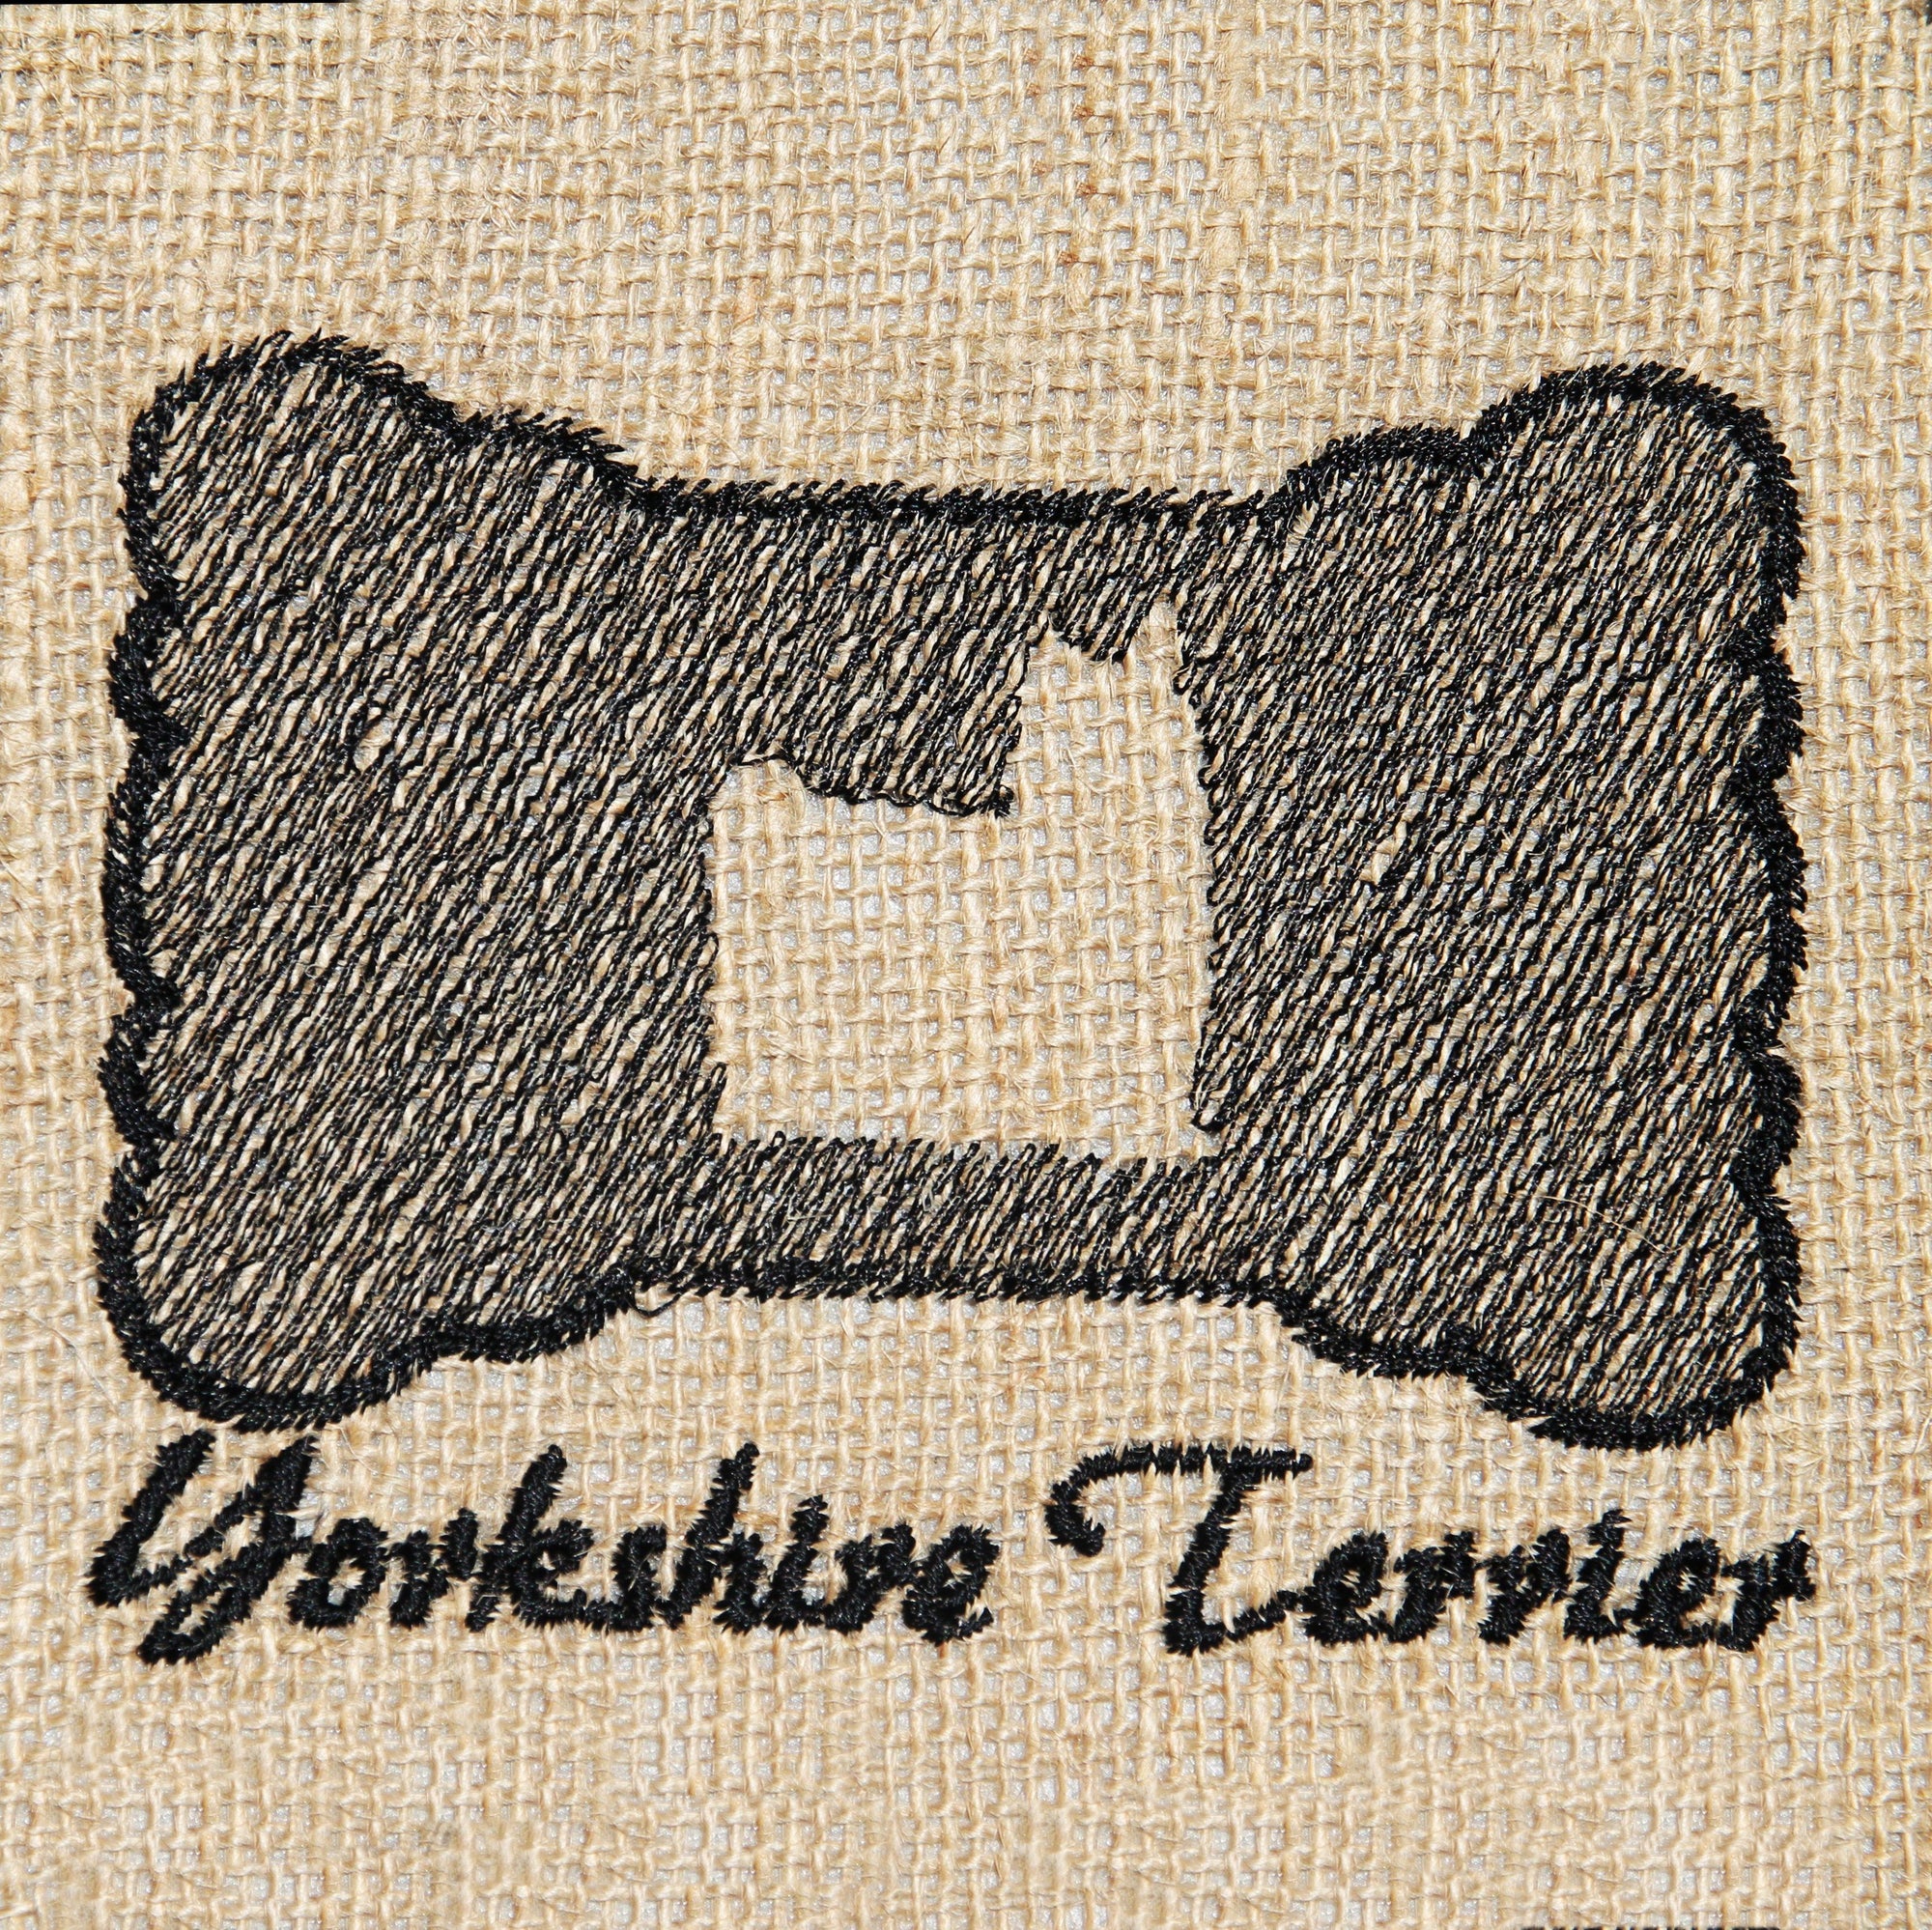 Yorkshire Terrier Dog Sillhouette - aStitch aHalf